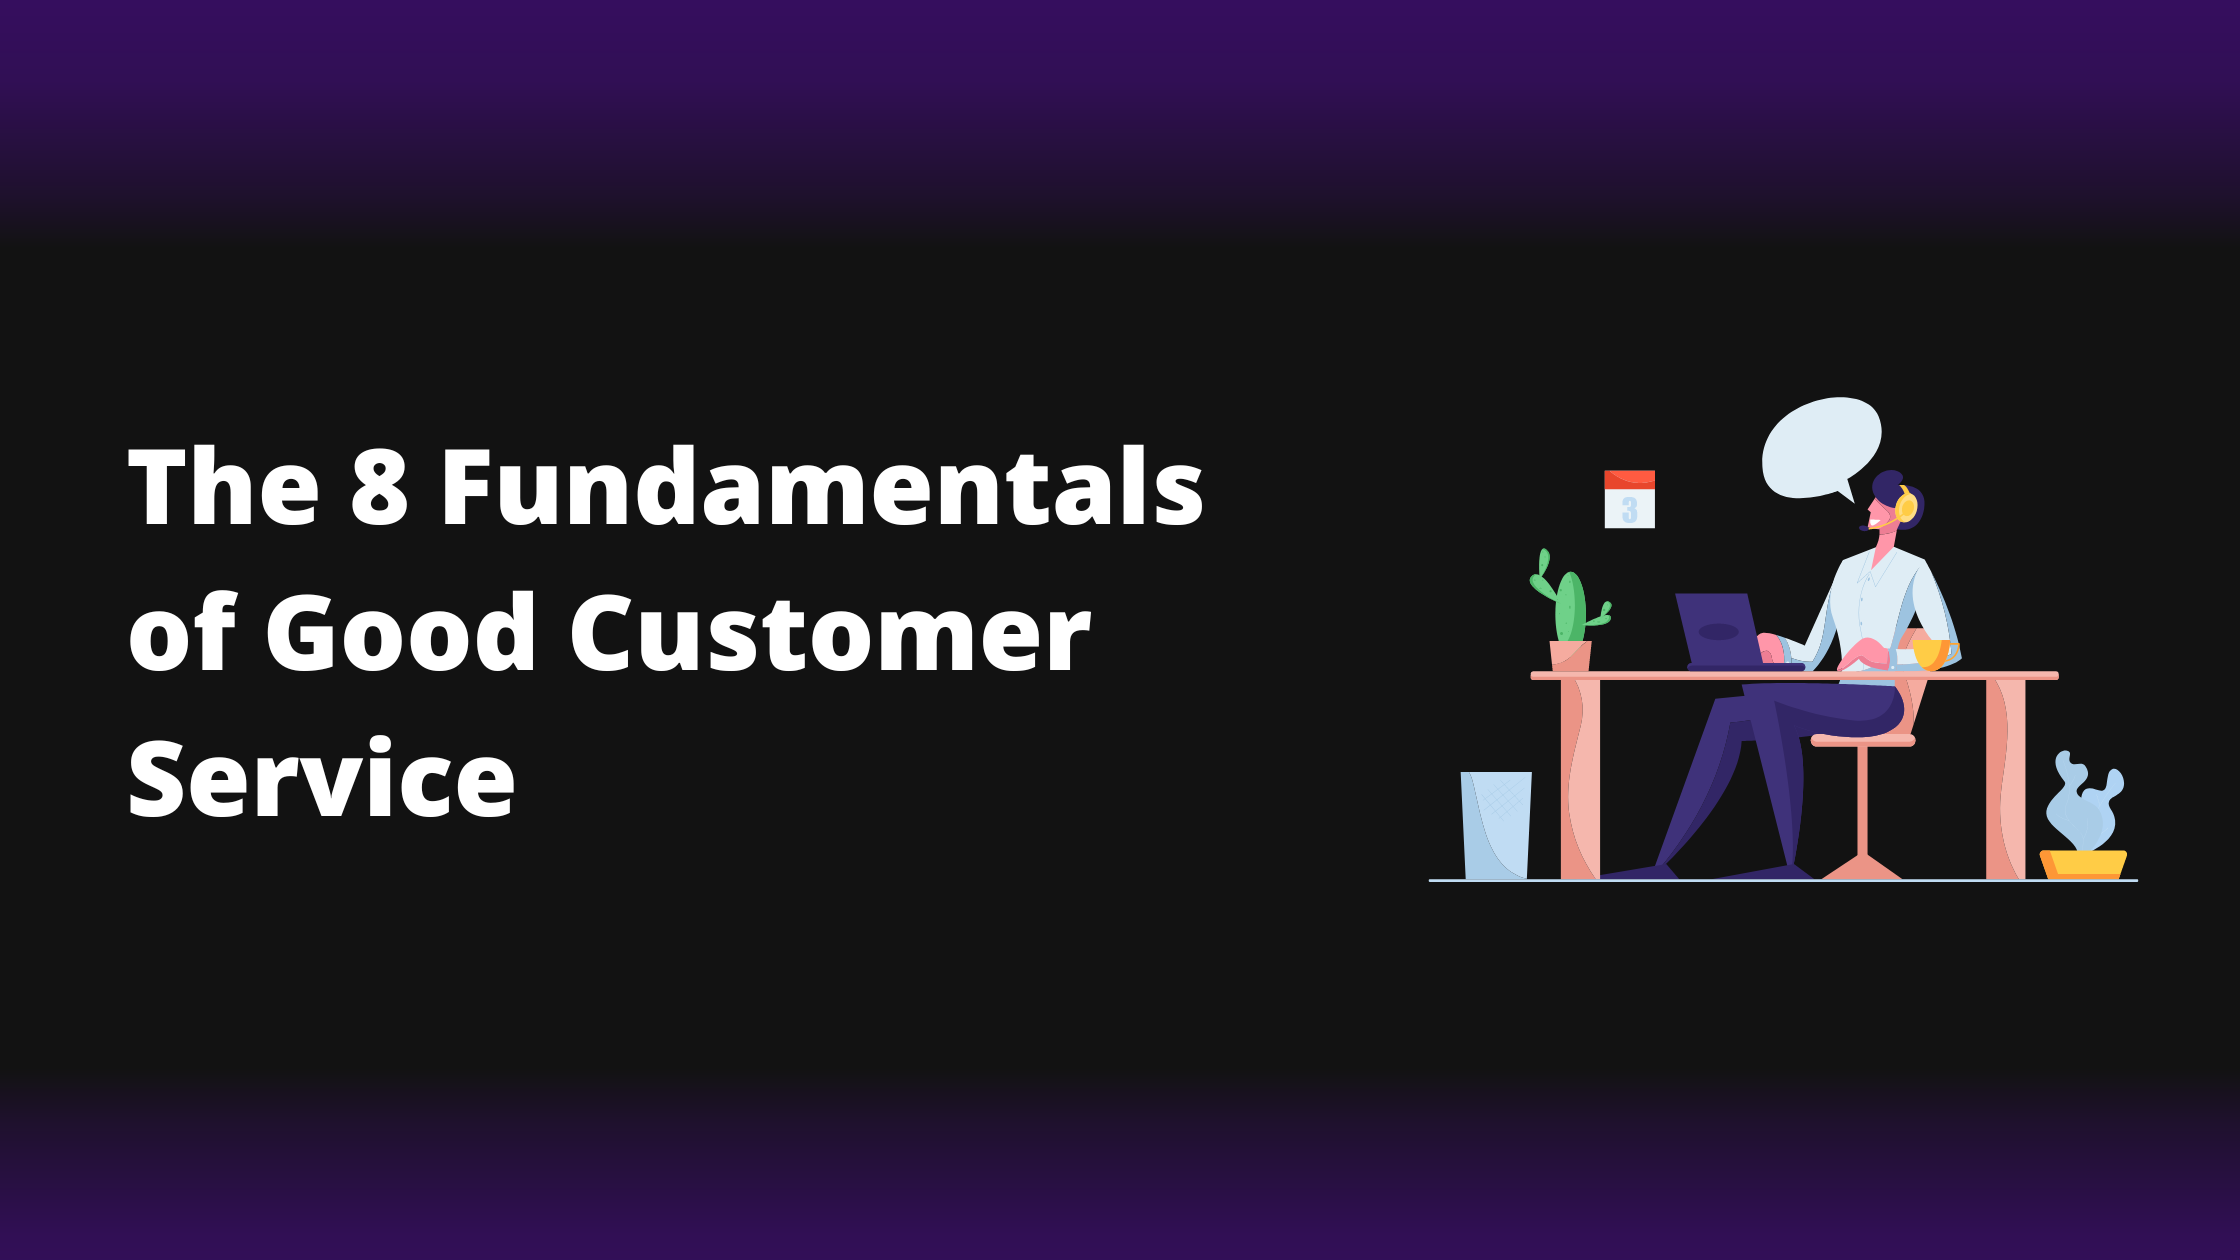 The Eight Fundamentals of Good Customer Service